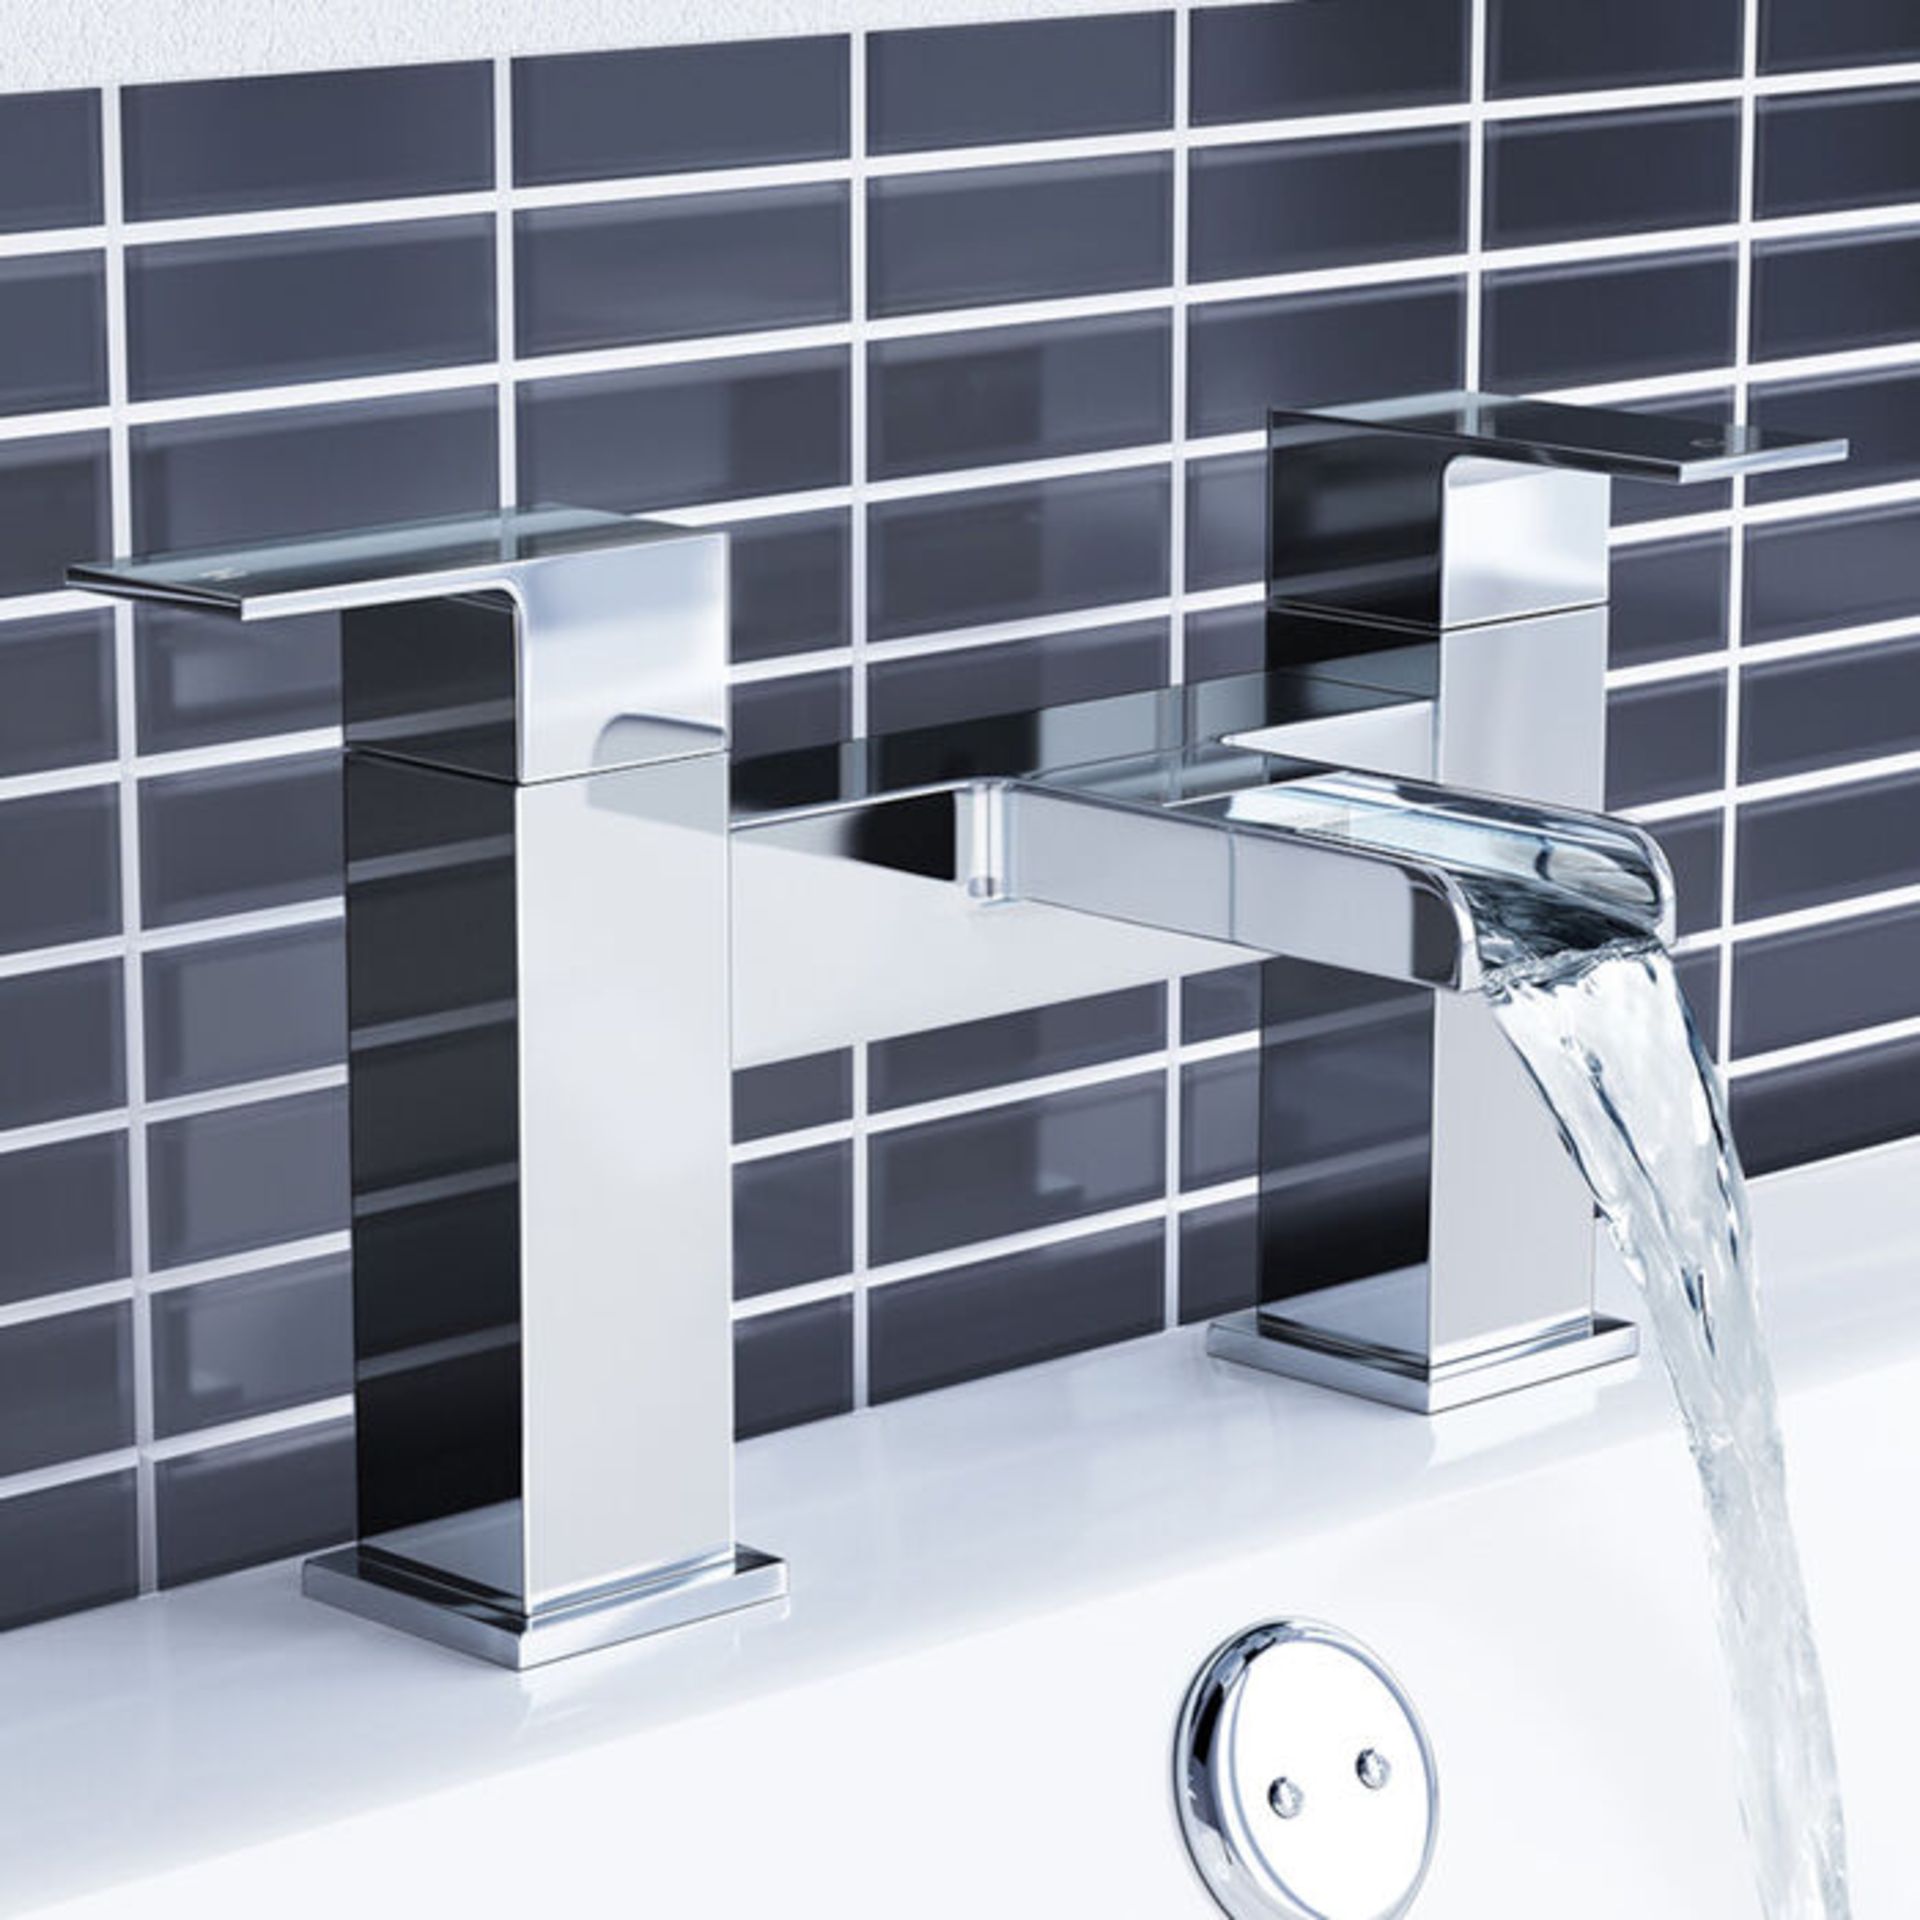 (XL46) Niagra II Waterfall Bath Mixer Taps. Modern design: Our Niagra Range of taps is carefull... - Image 3 of 3